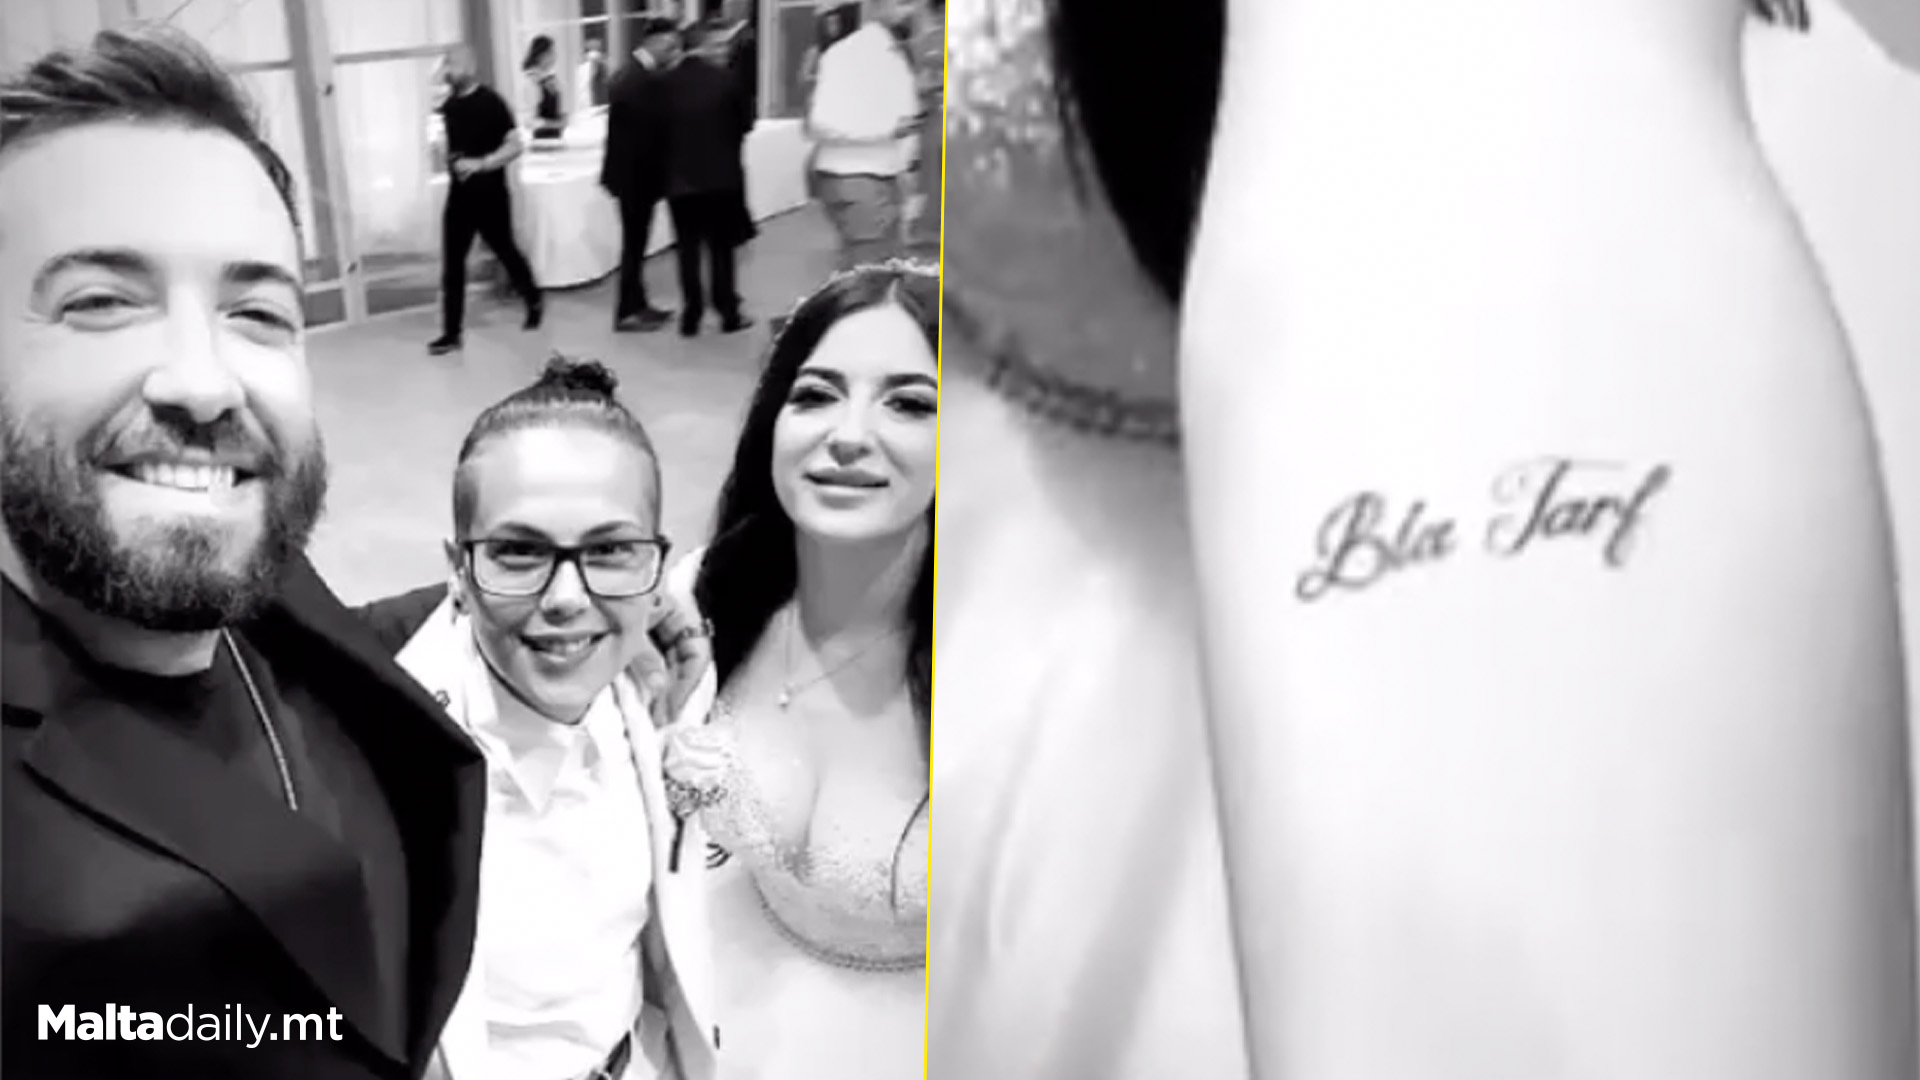 Bride Tattoos ‘Bla Tarf’ Song Name On Arm